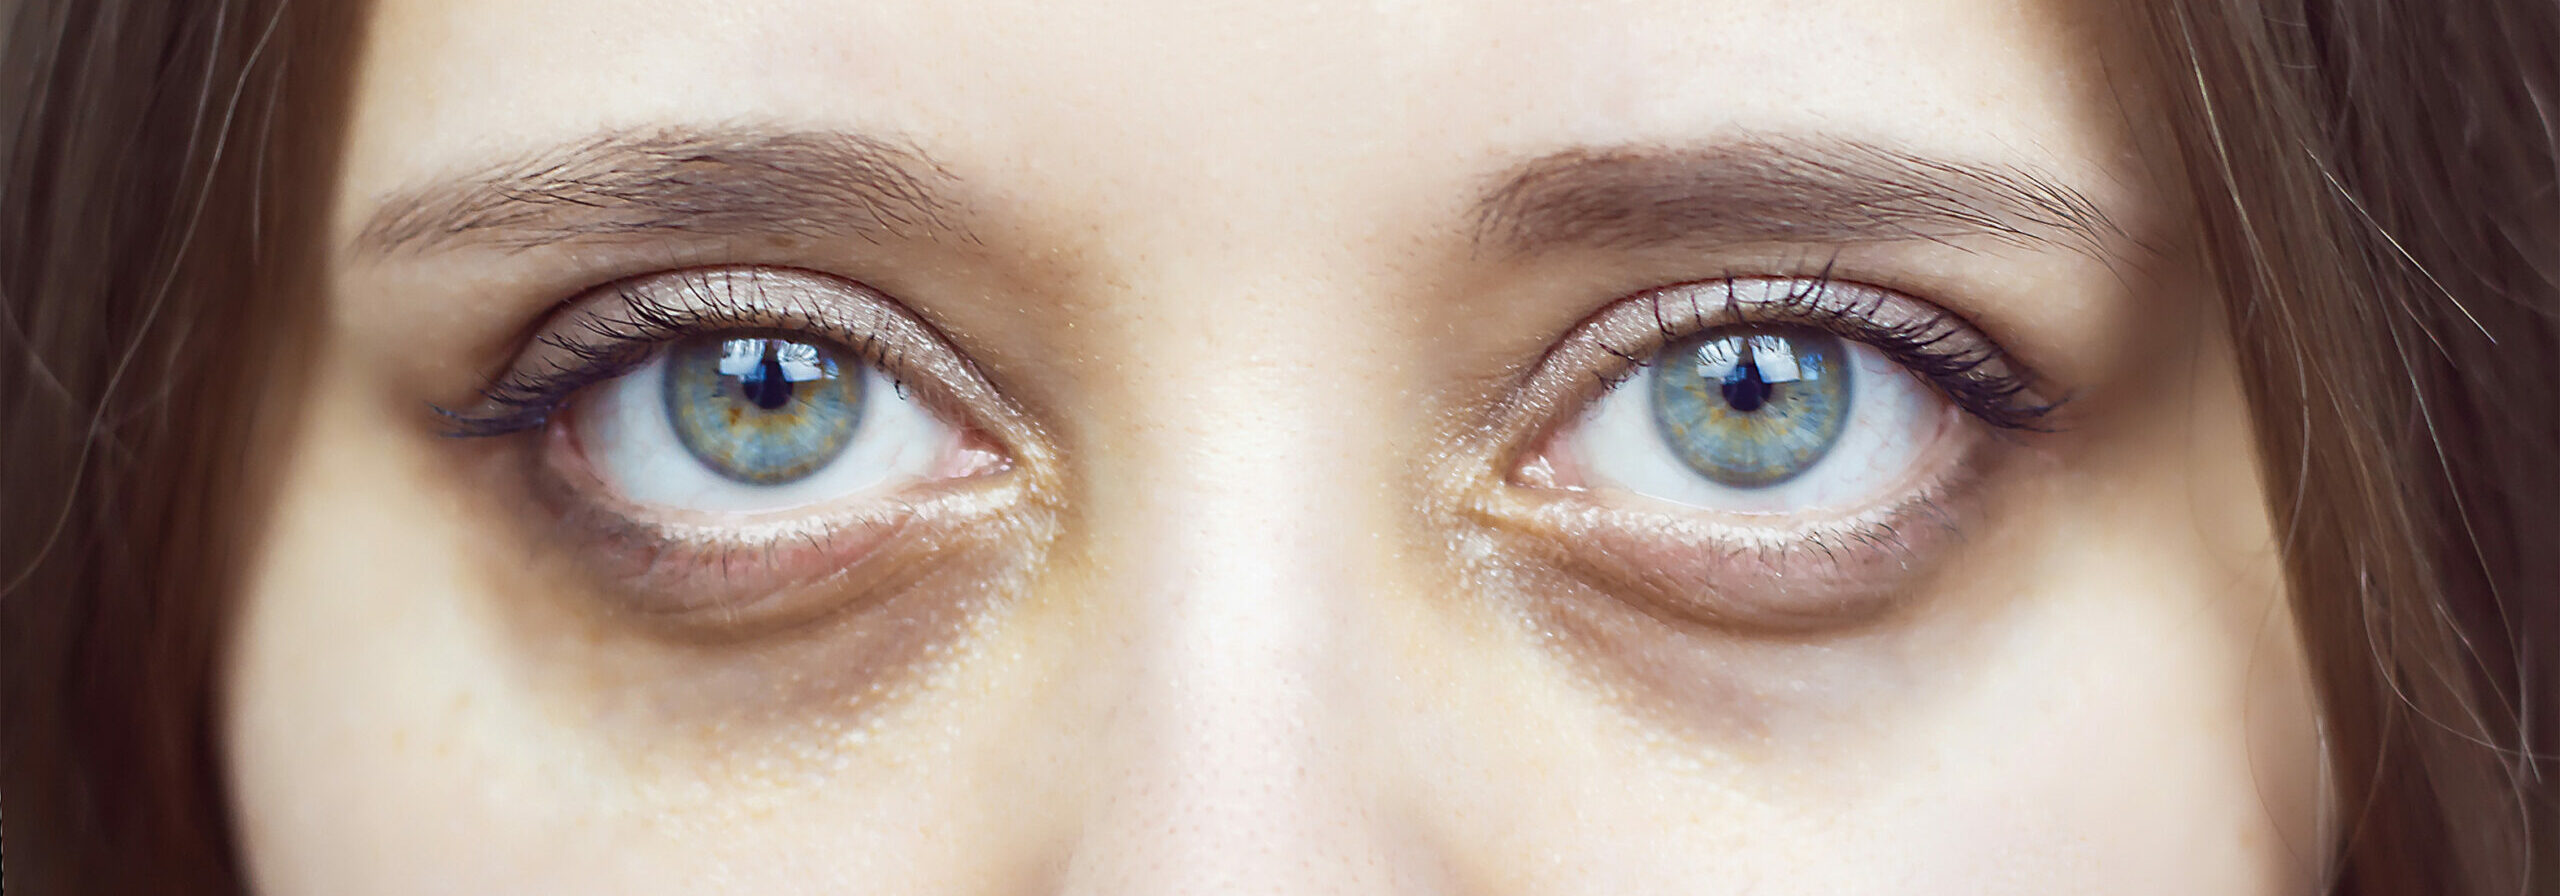 What causes dark circles under eyes | How to get rid of dark circles